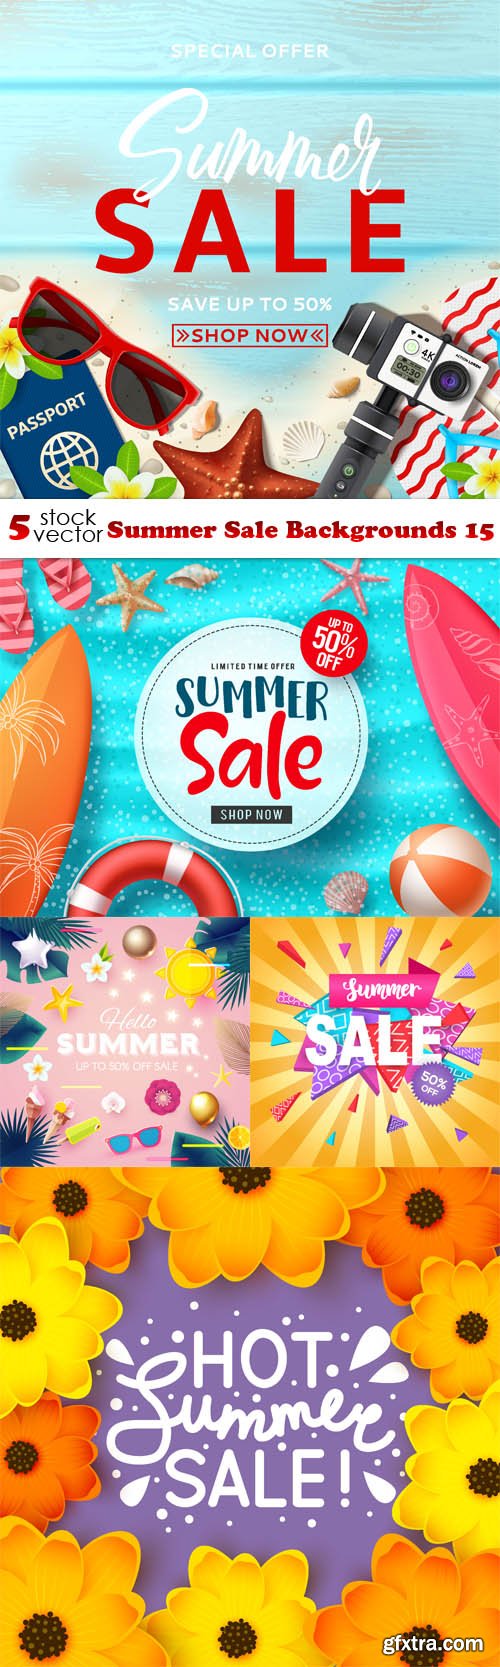 Vectors - Summer Sale Backgrounds 15